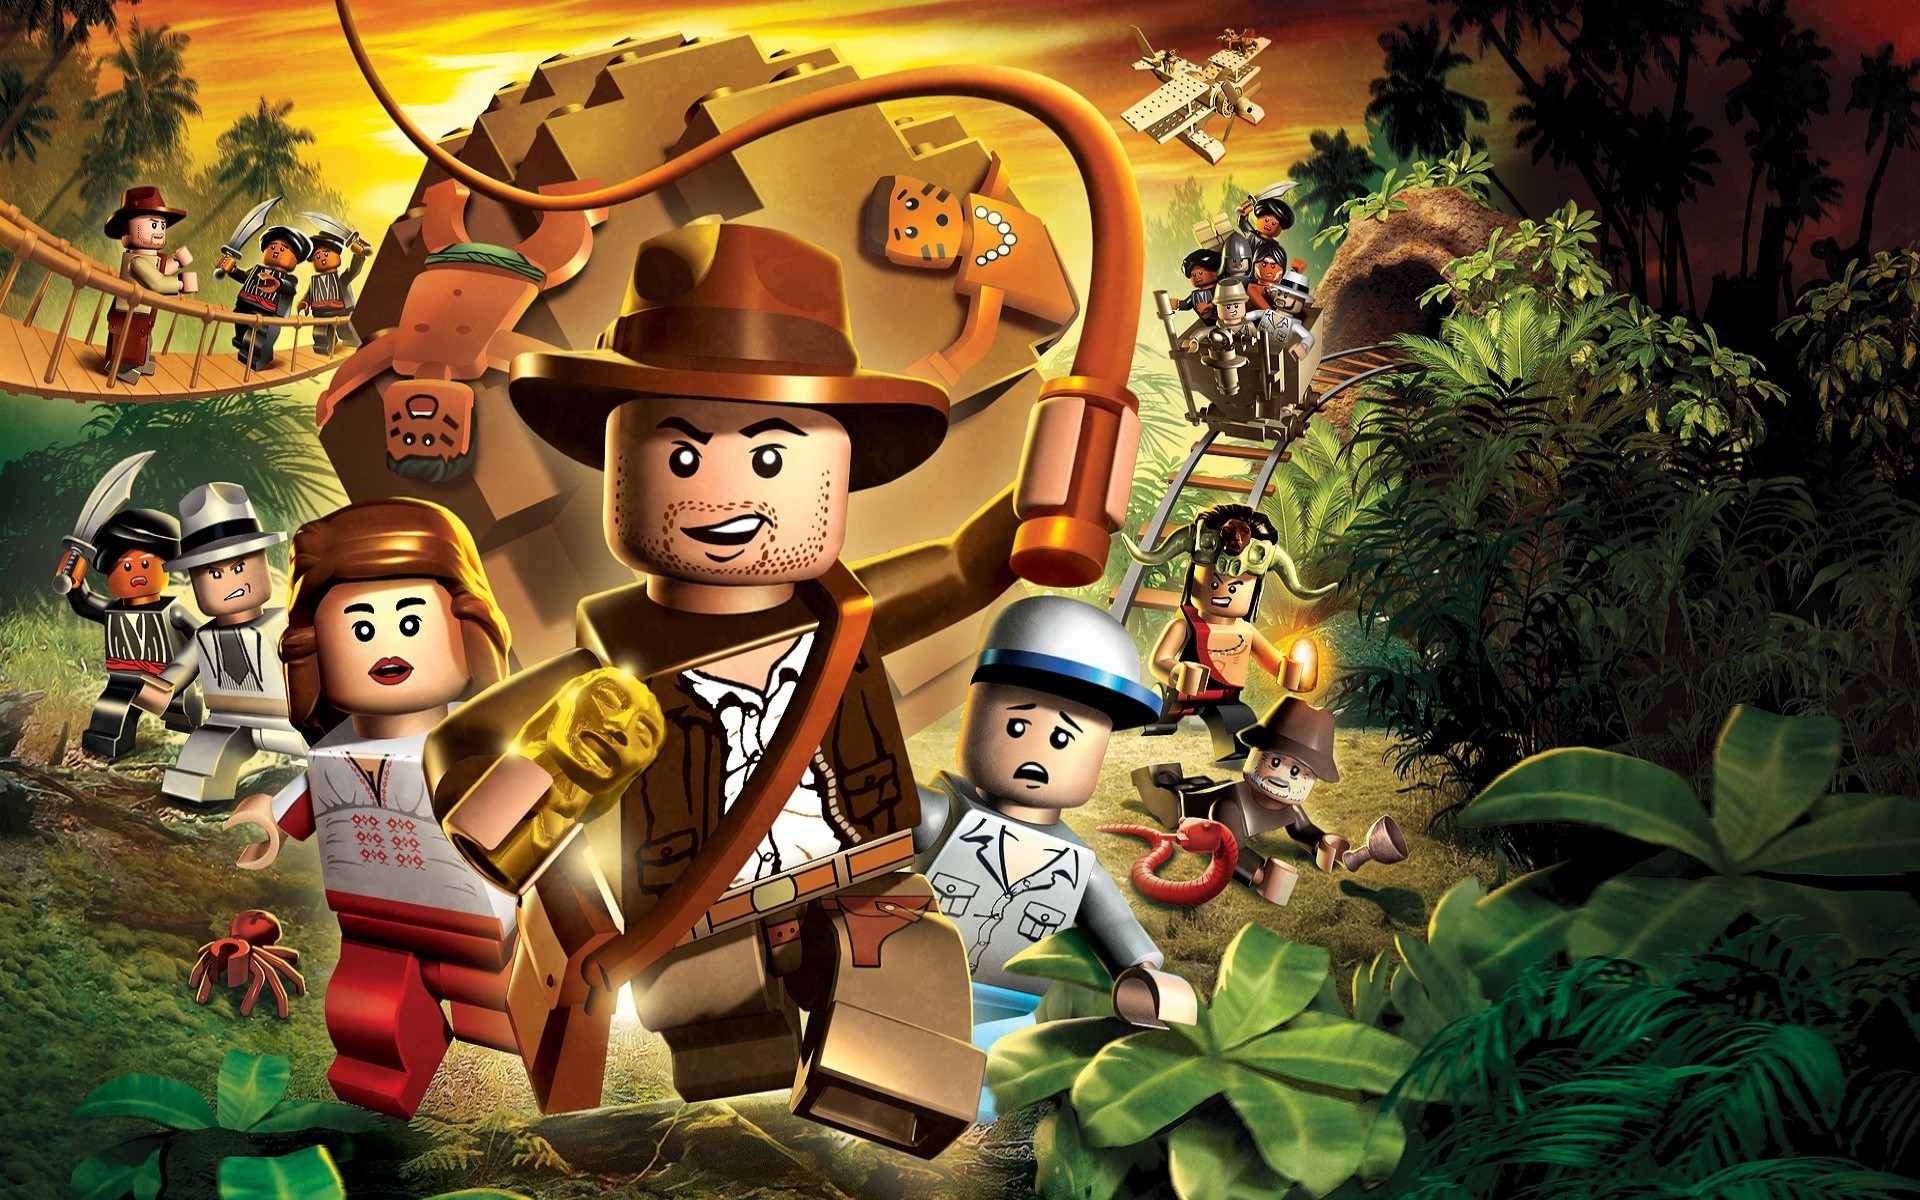 Indiana Jones Lego Figurines - Lego Indiana Jones Art - HD Wallpaper 